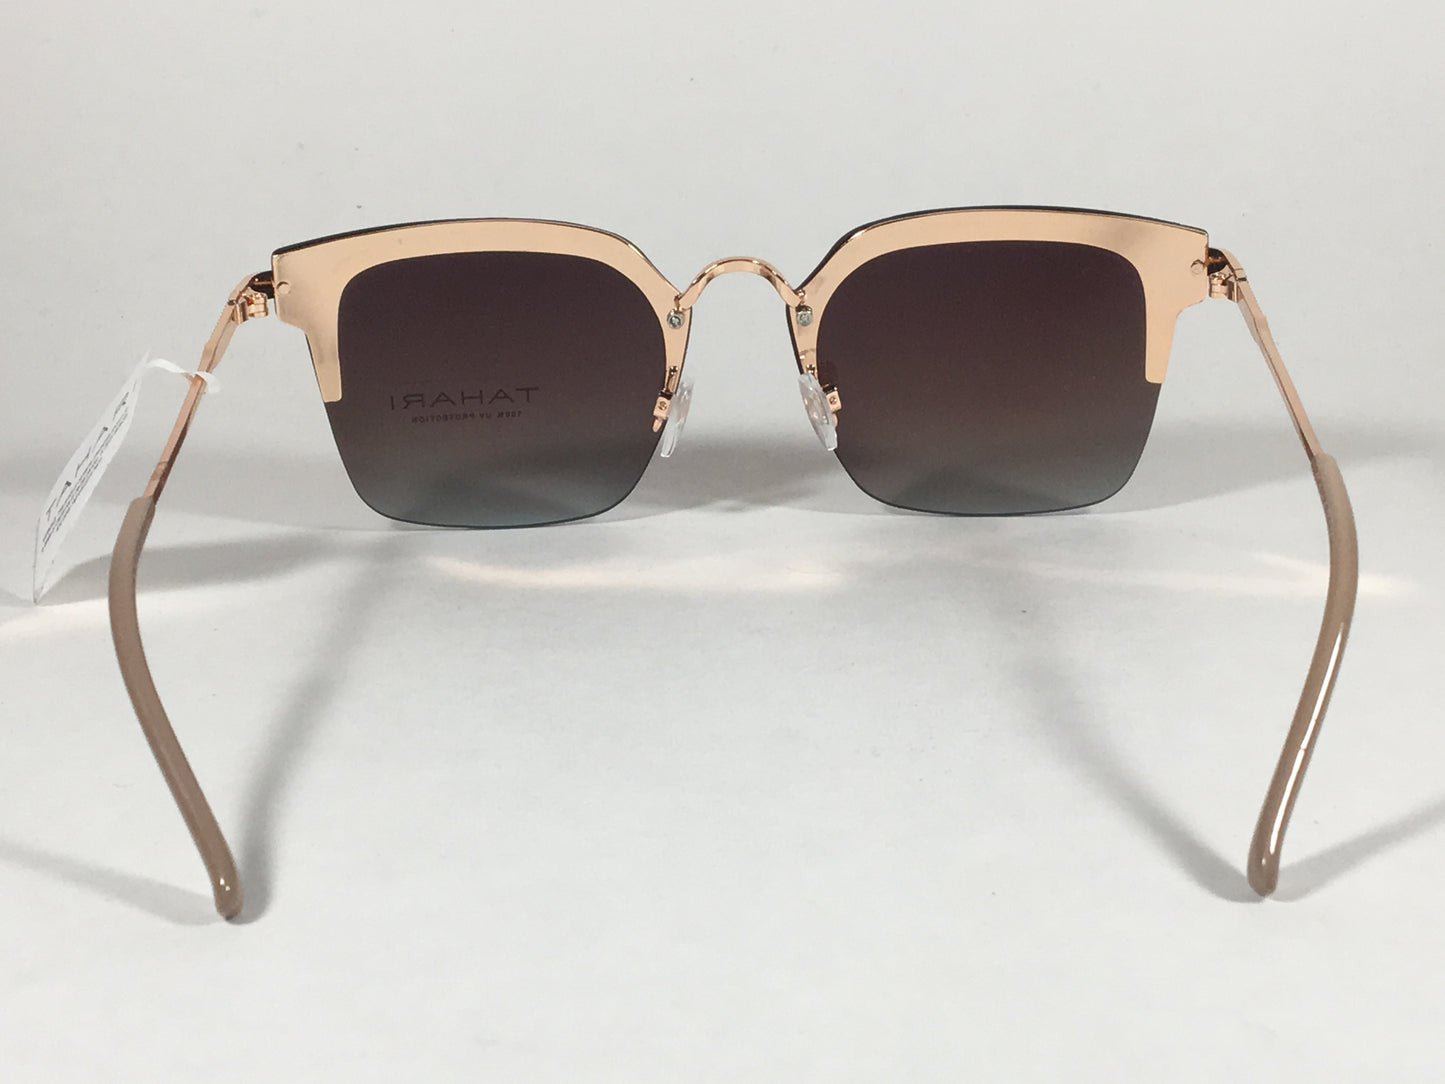 Tahari Rimless Square Sunglasses Rose Gold Nude Brown Gradient Lens Th697 Rgdnd - Sunglasses